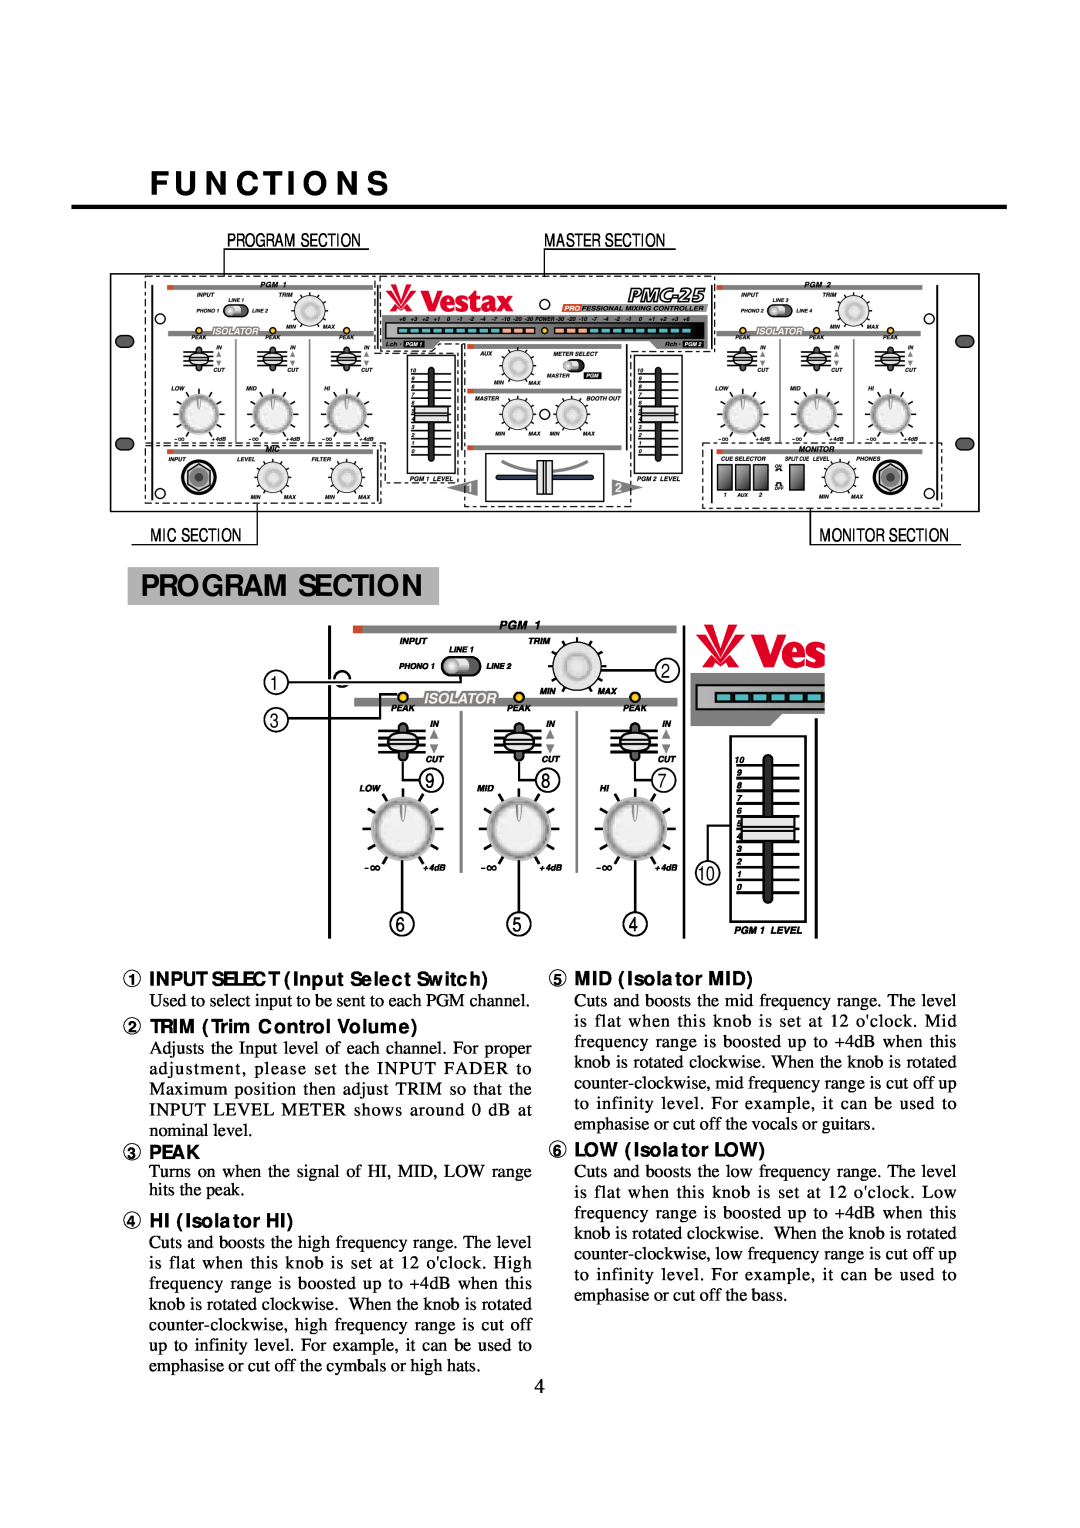 Vestax PMC-25 F U N C T I O N S, Program Section, INPUT SELECT Input Select Switch, TRIM Trim Control Volume, Peak 